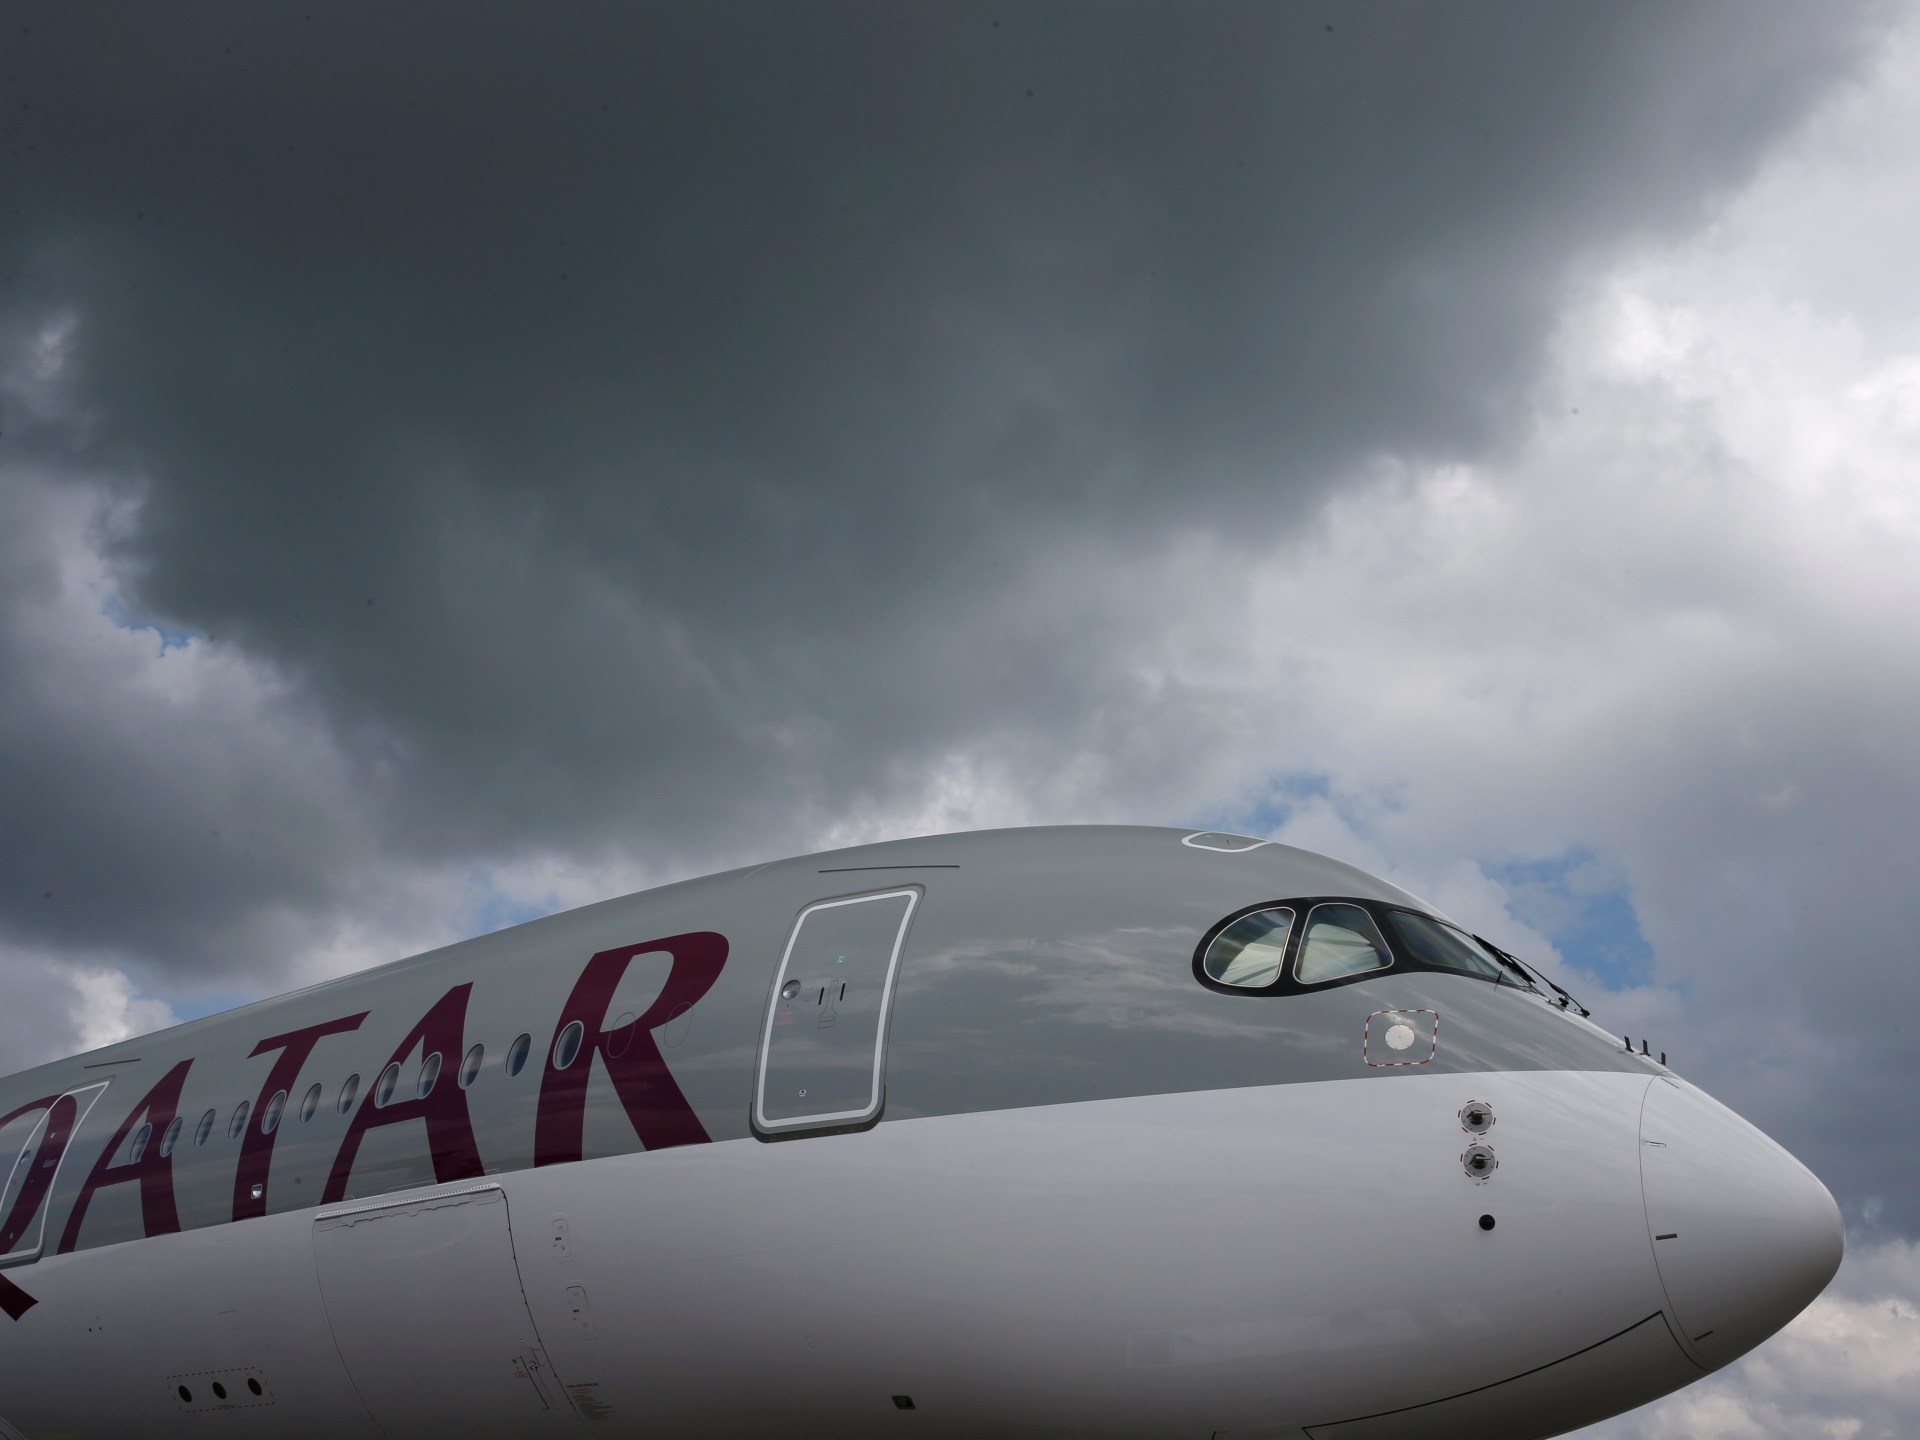 Australia’s acting PM not consulted over Qatar Airways’ bid block